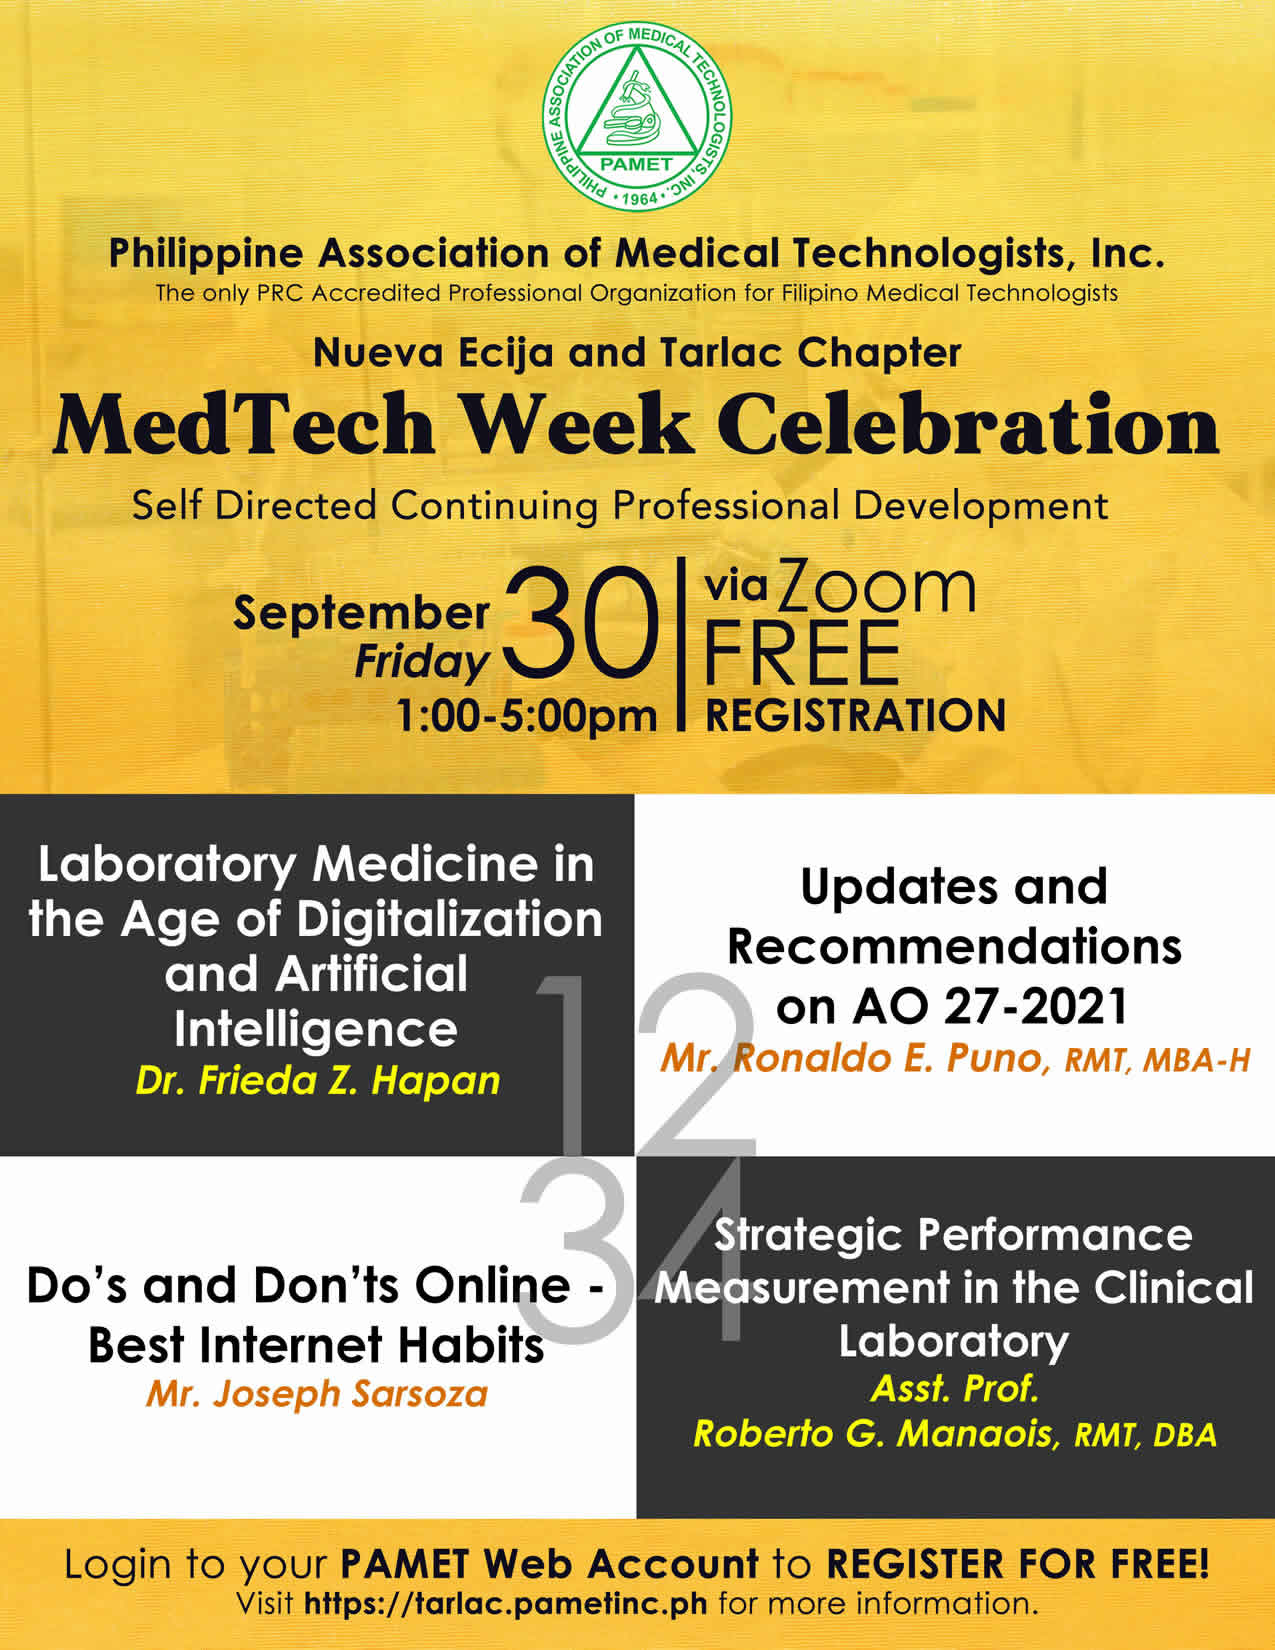 PAMET Tarlac and Nueva Ecija Chapter: MedTech Week Celebration 2022